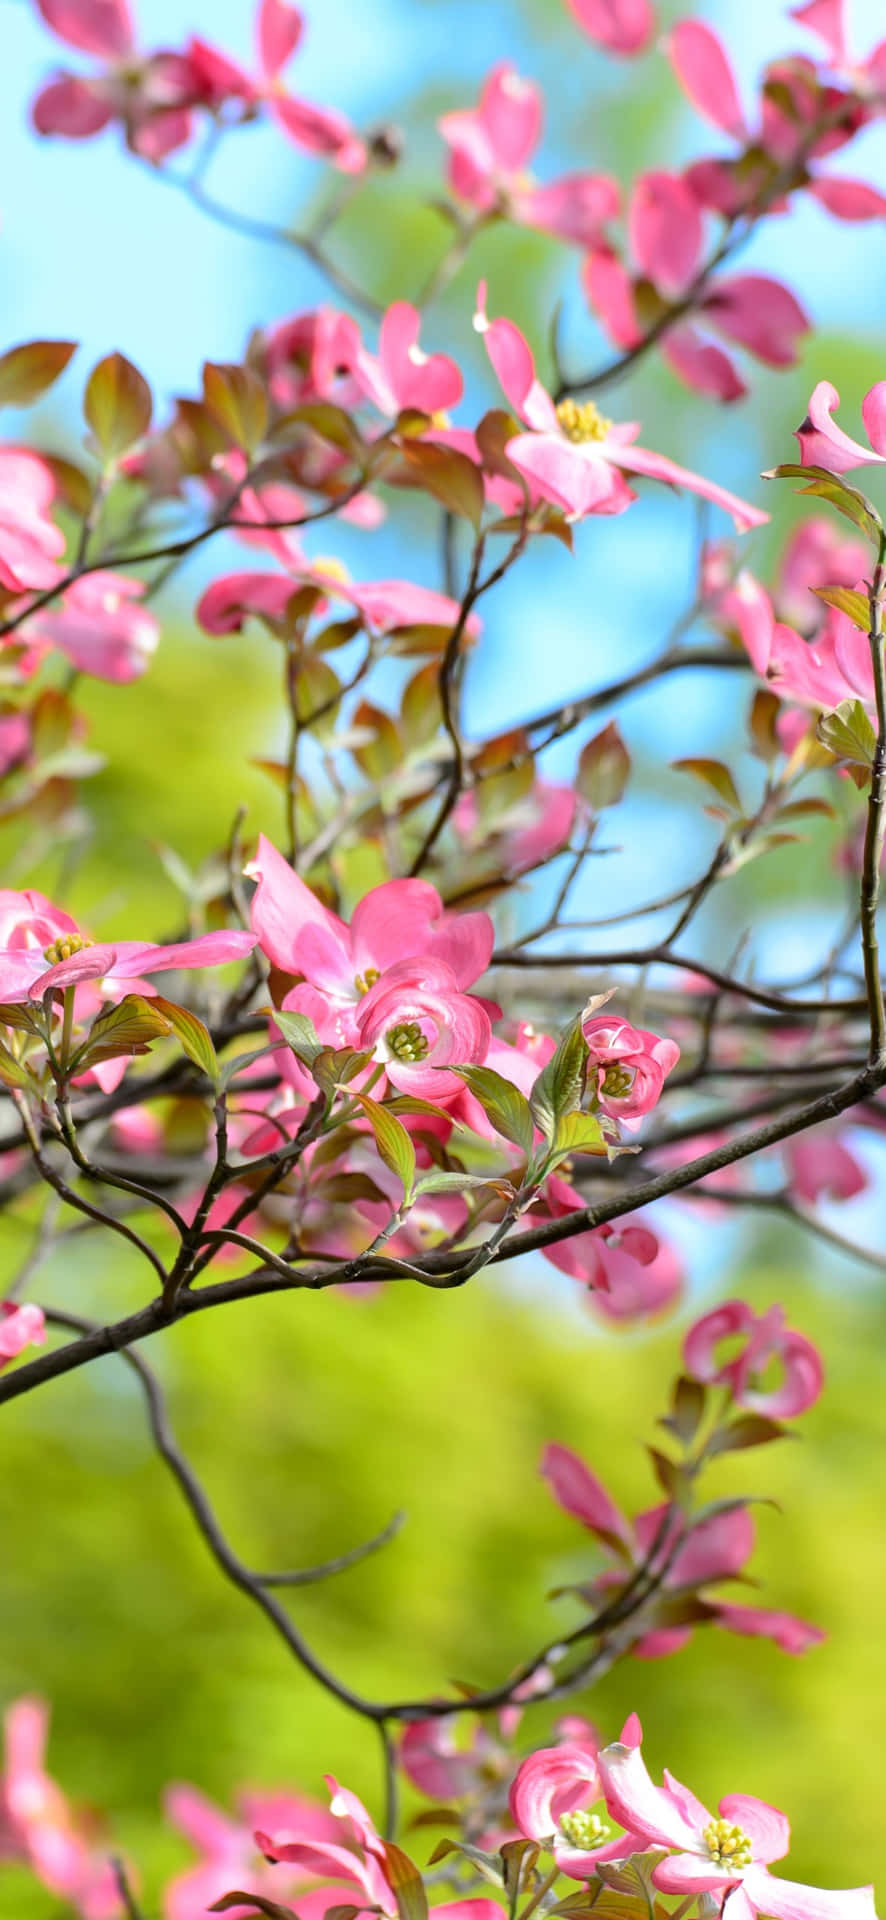 Spring Blossom Branches.jpg Wallpaper